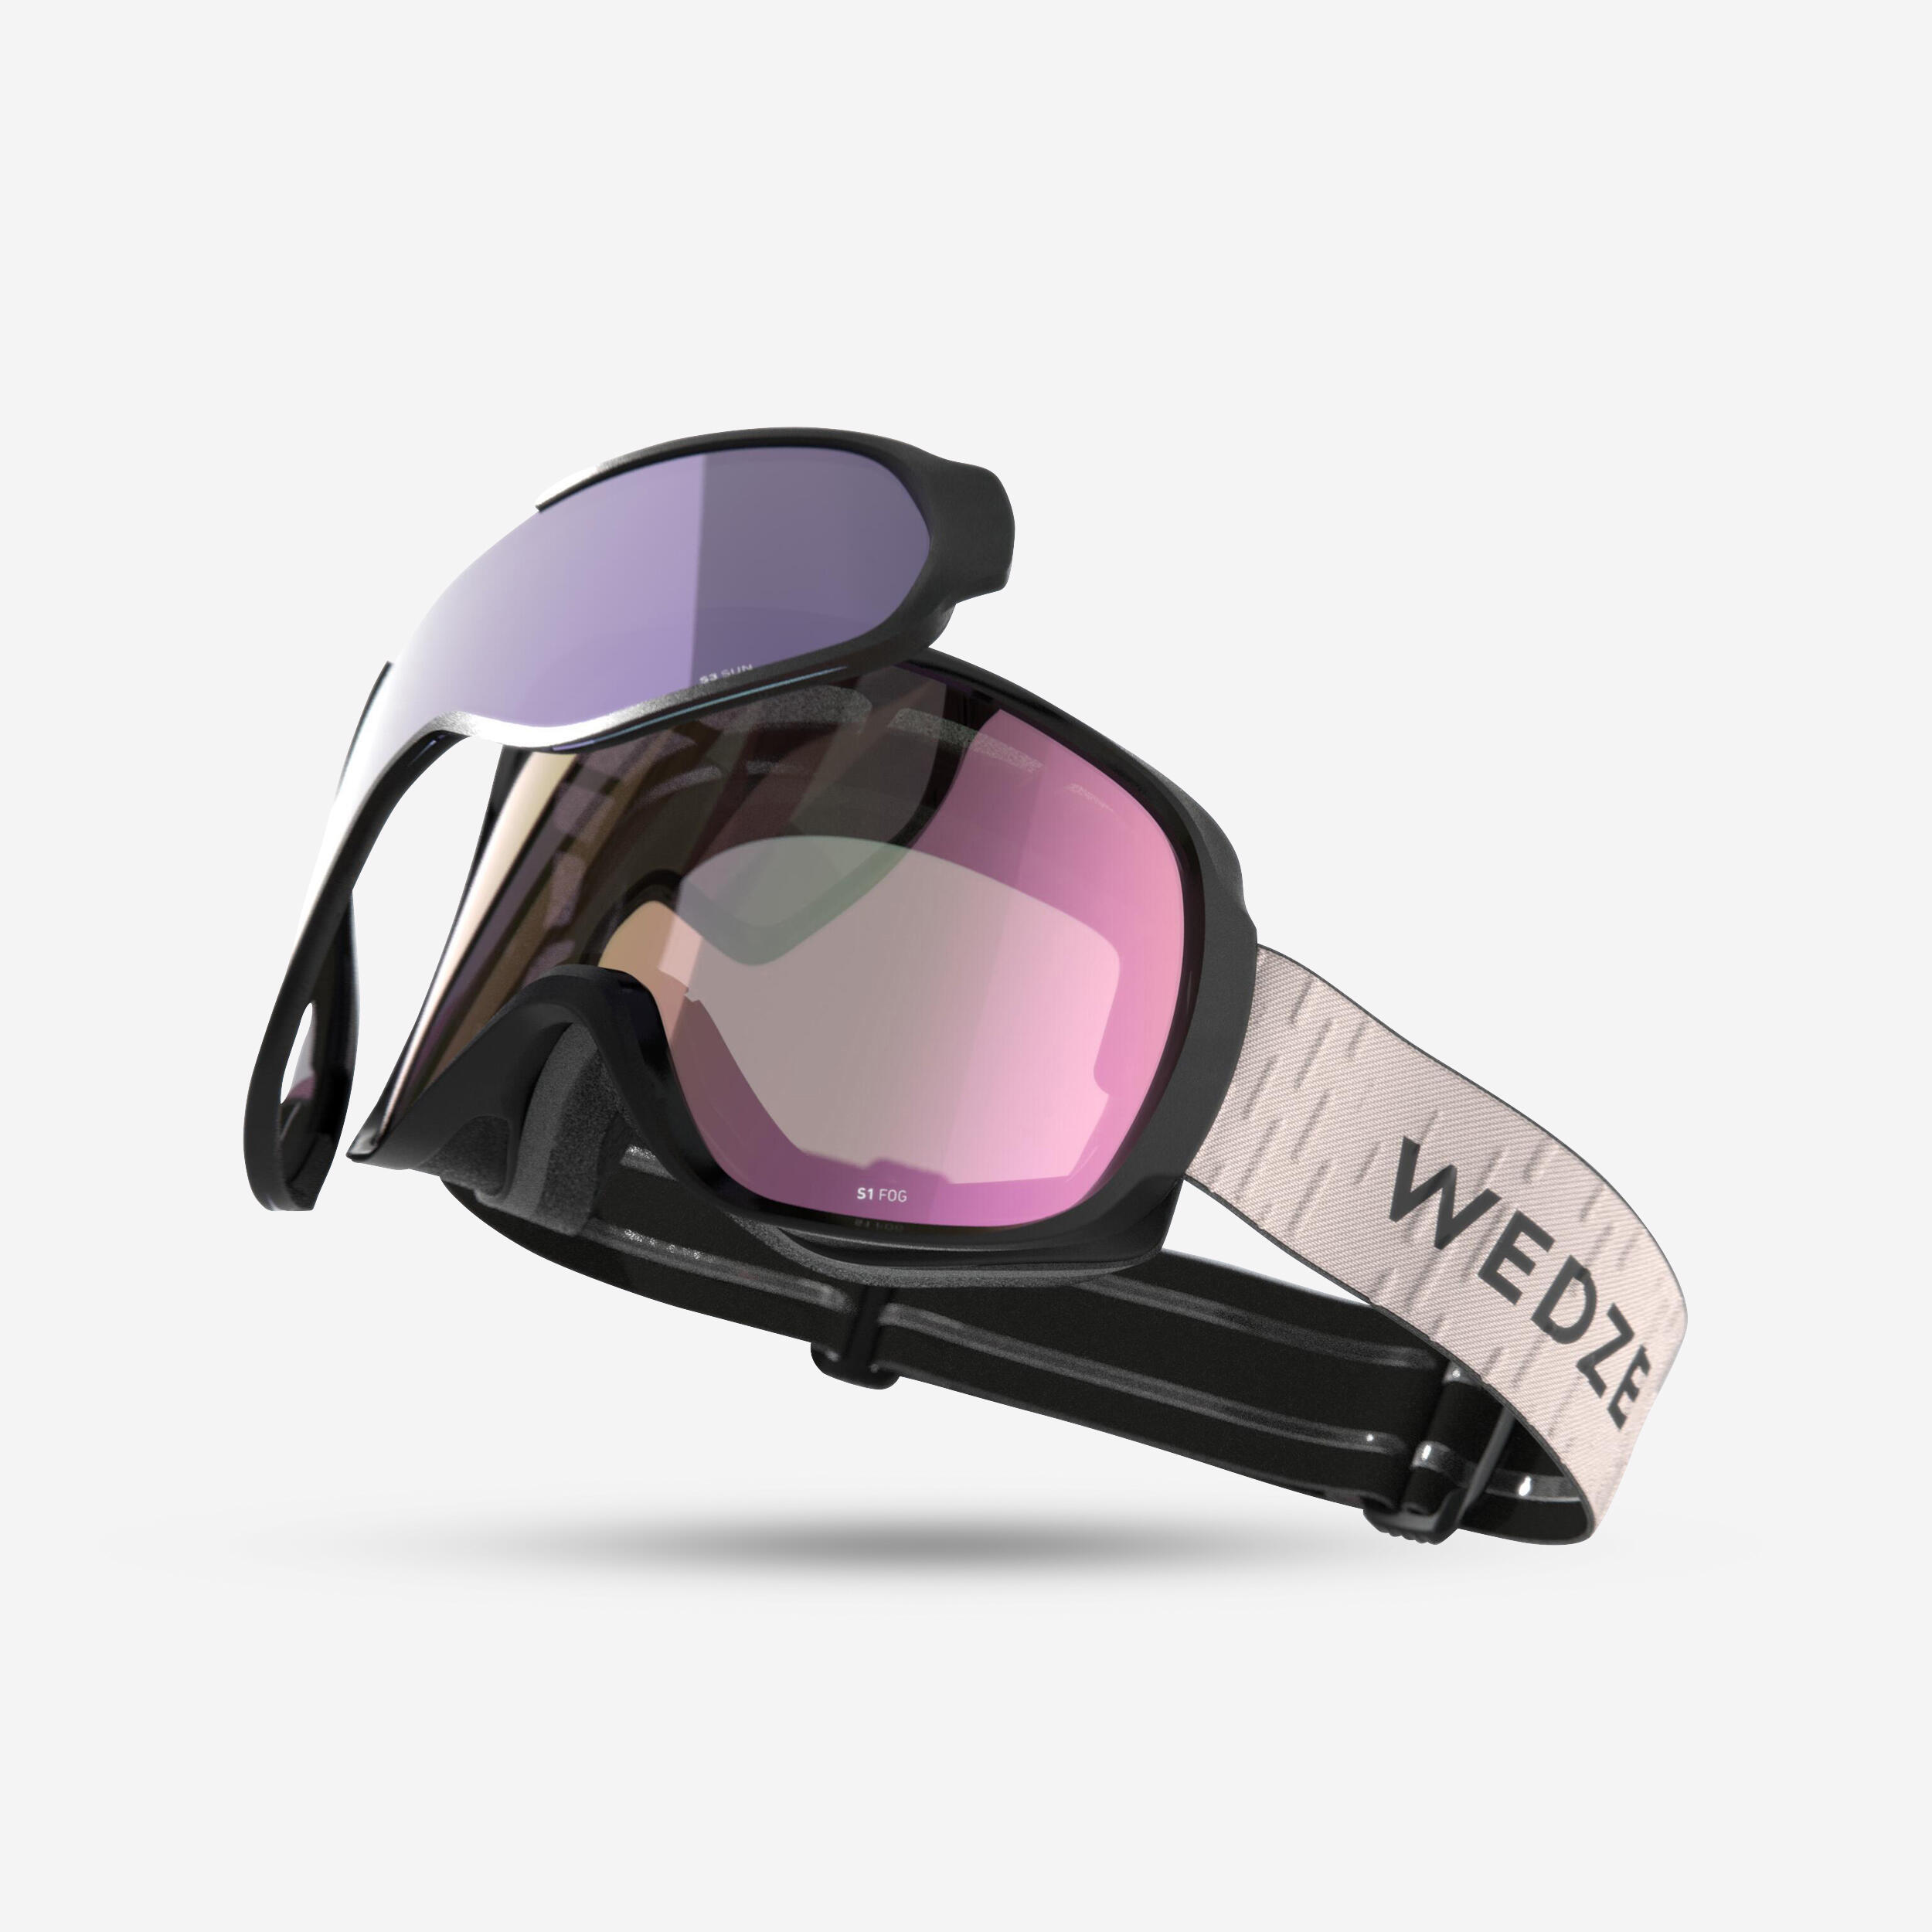 All-Weather Ski Mask – G 500 I Pink